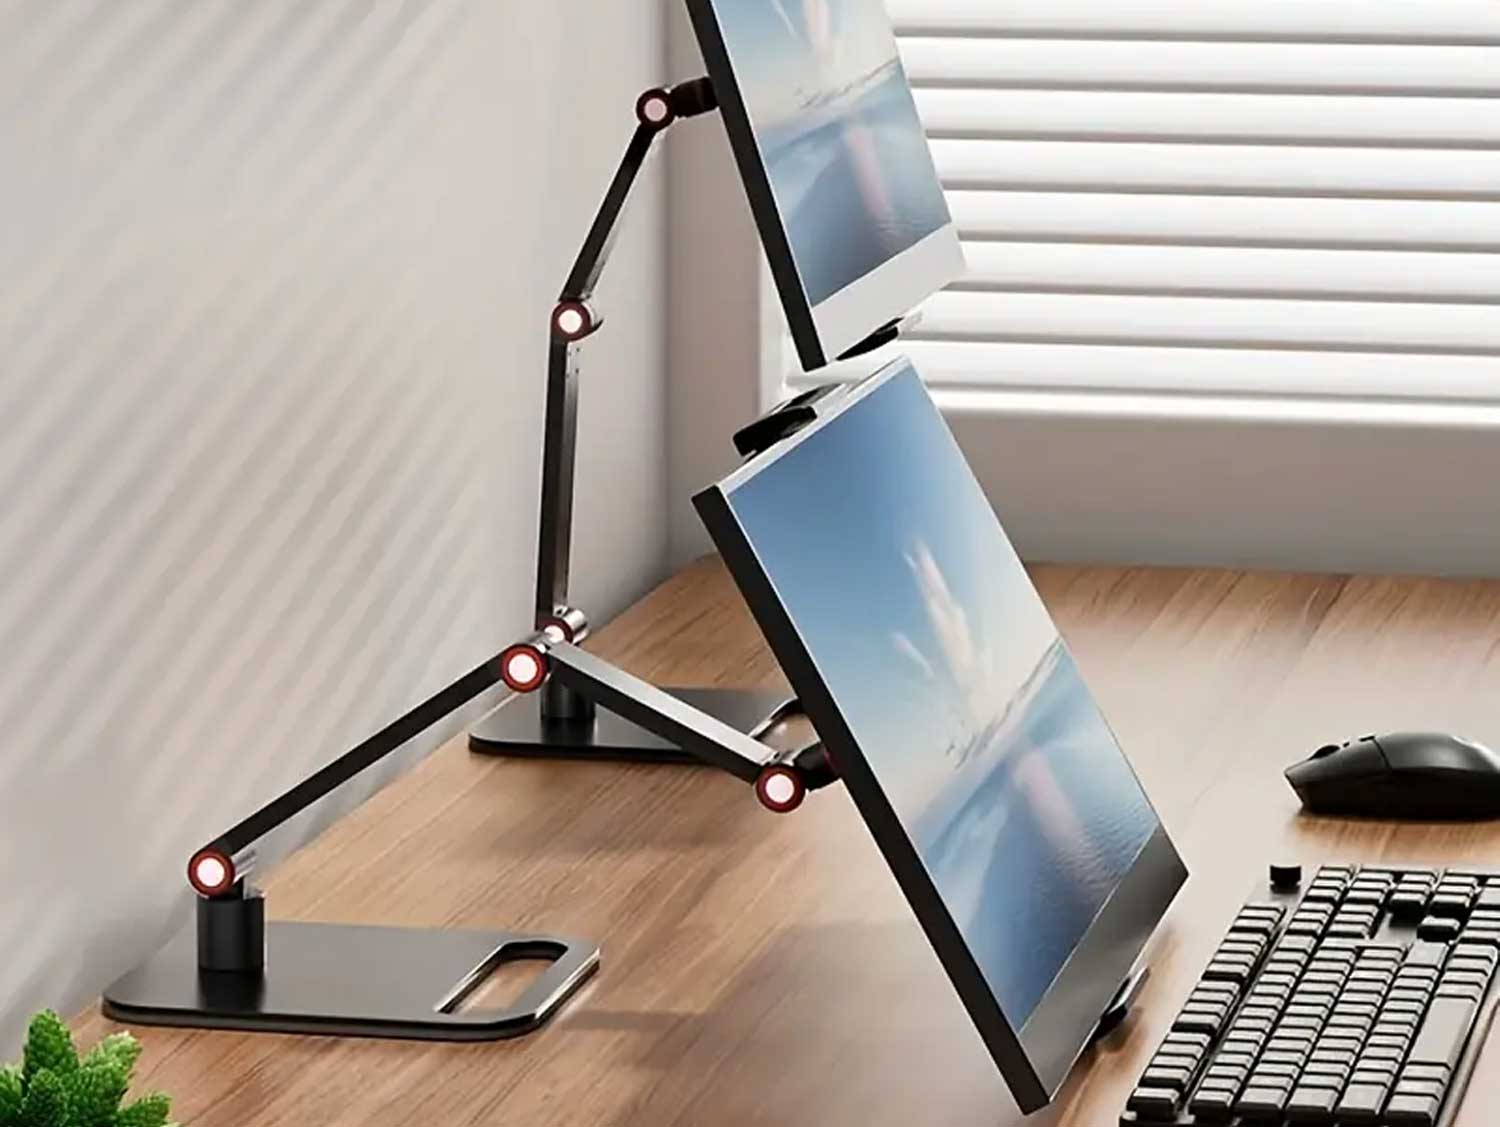 Buy Adjustable Monitor Tablet Stand Online in Sri Lanka